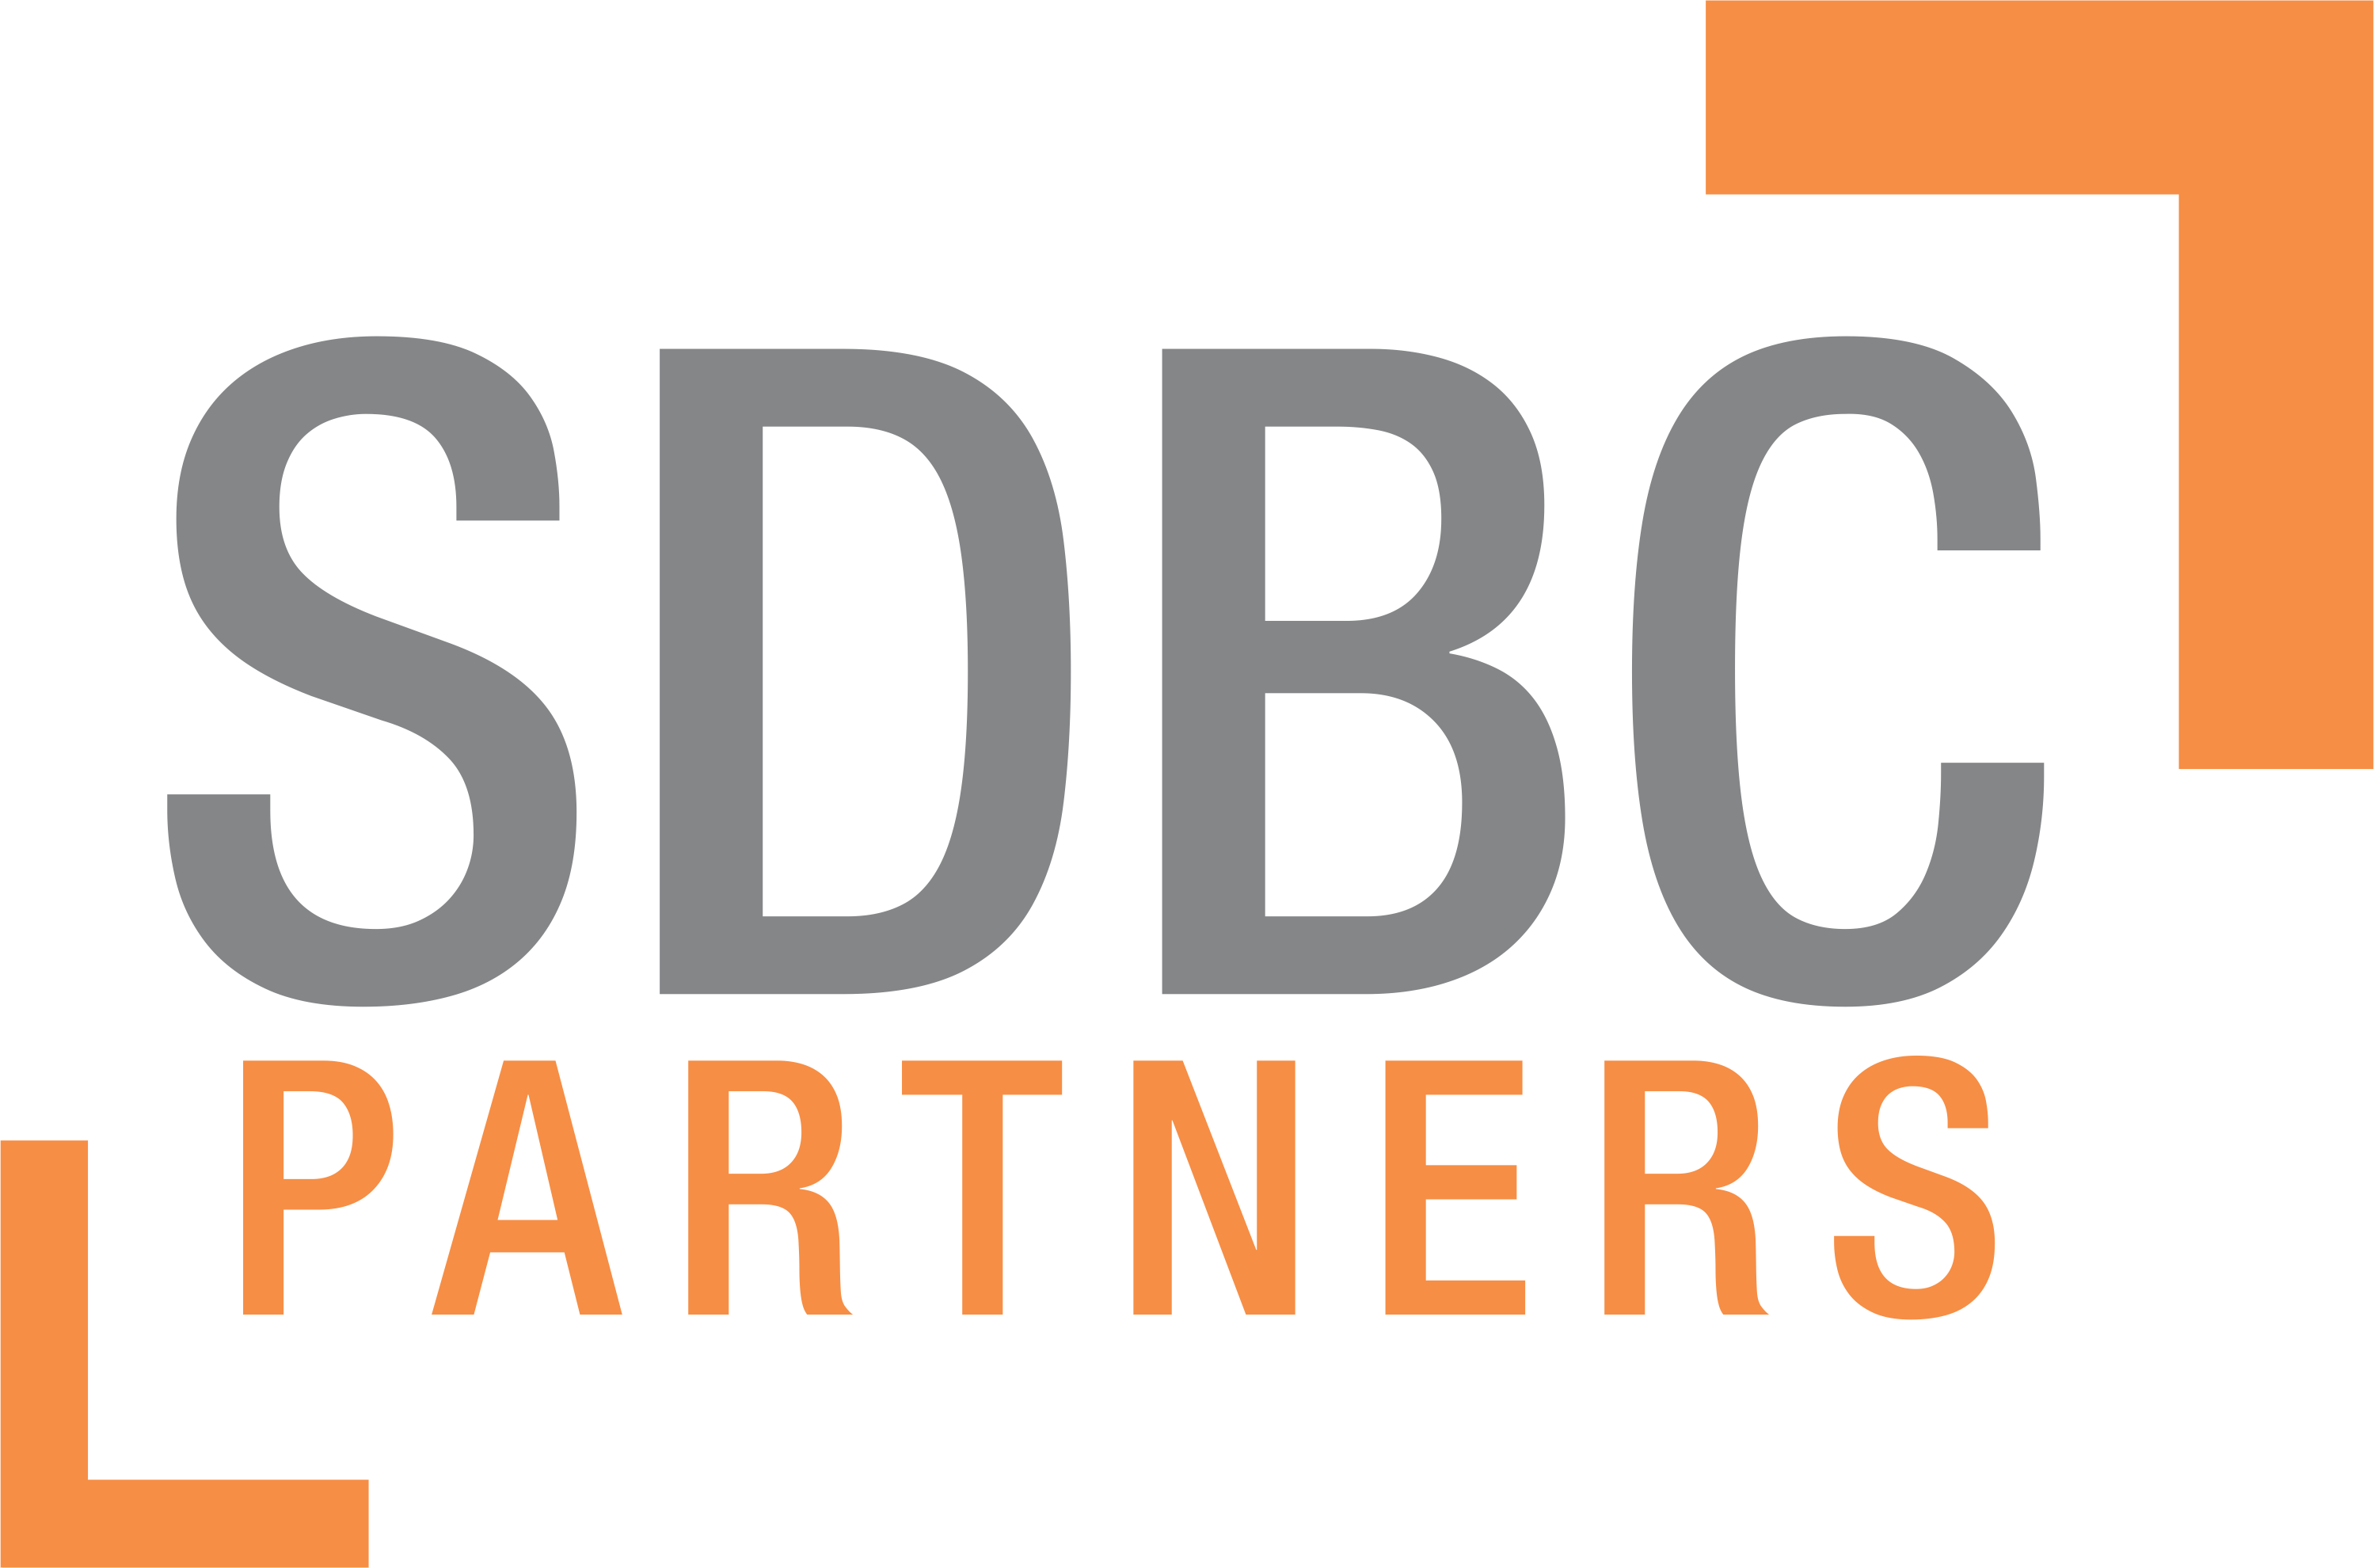 SDBC Partners